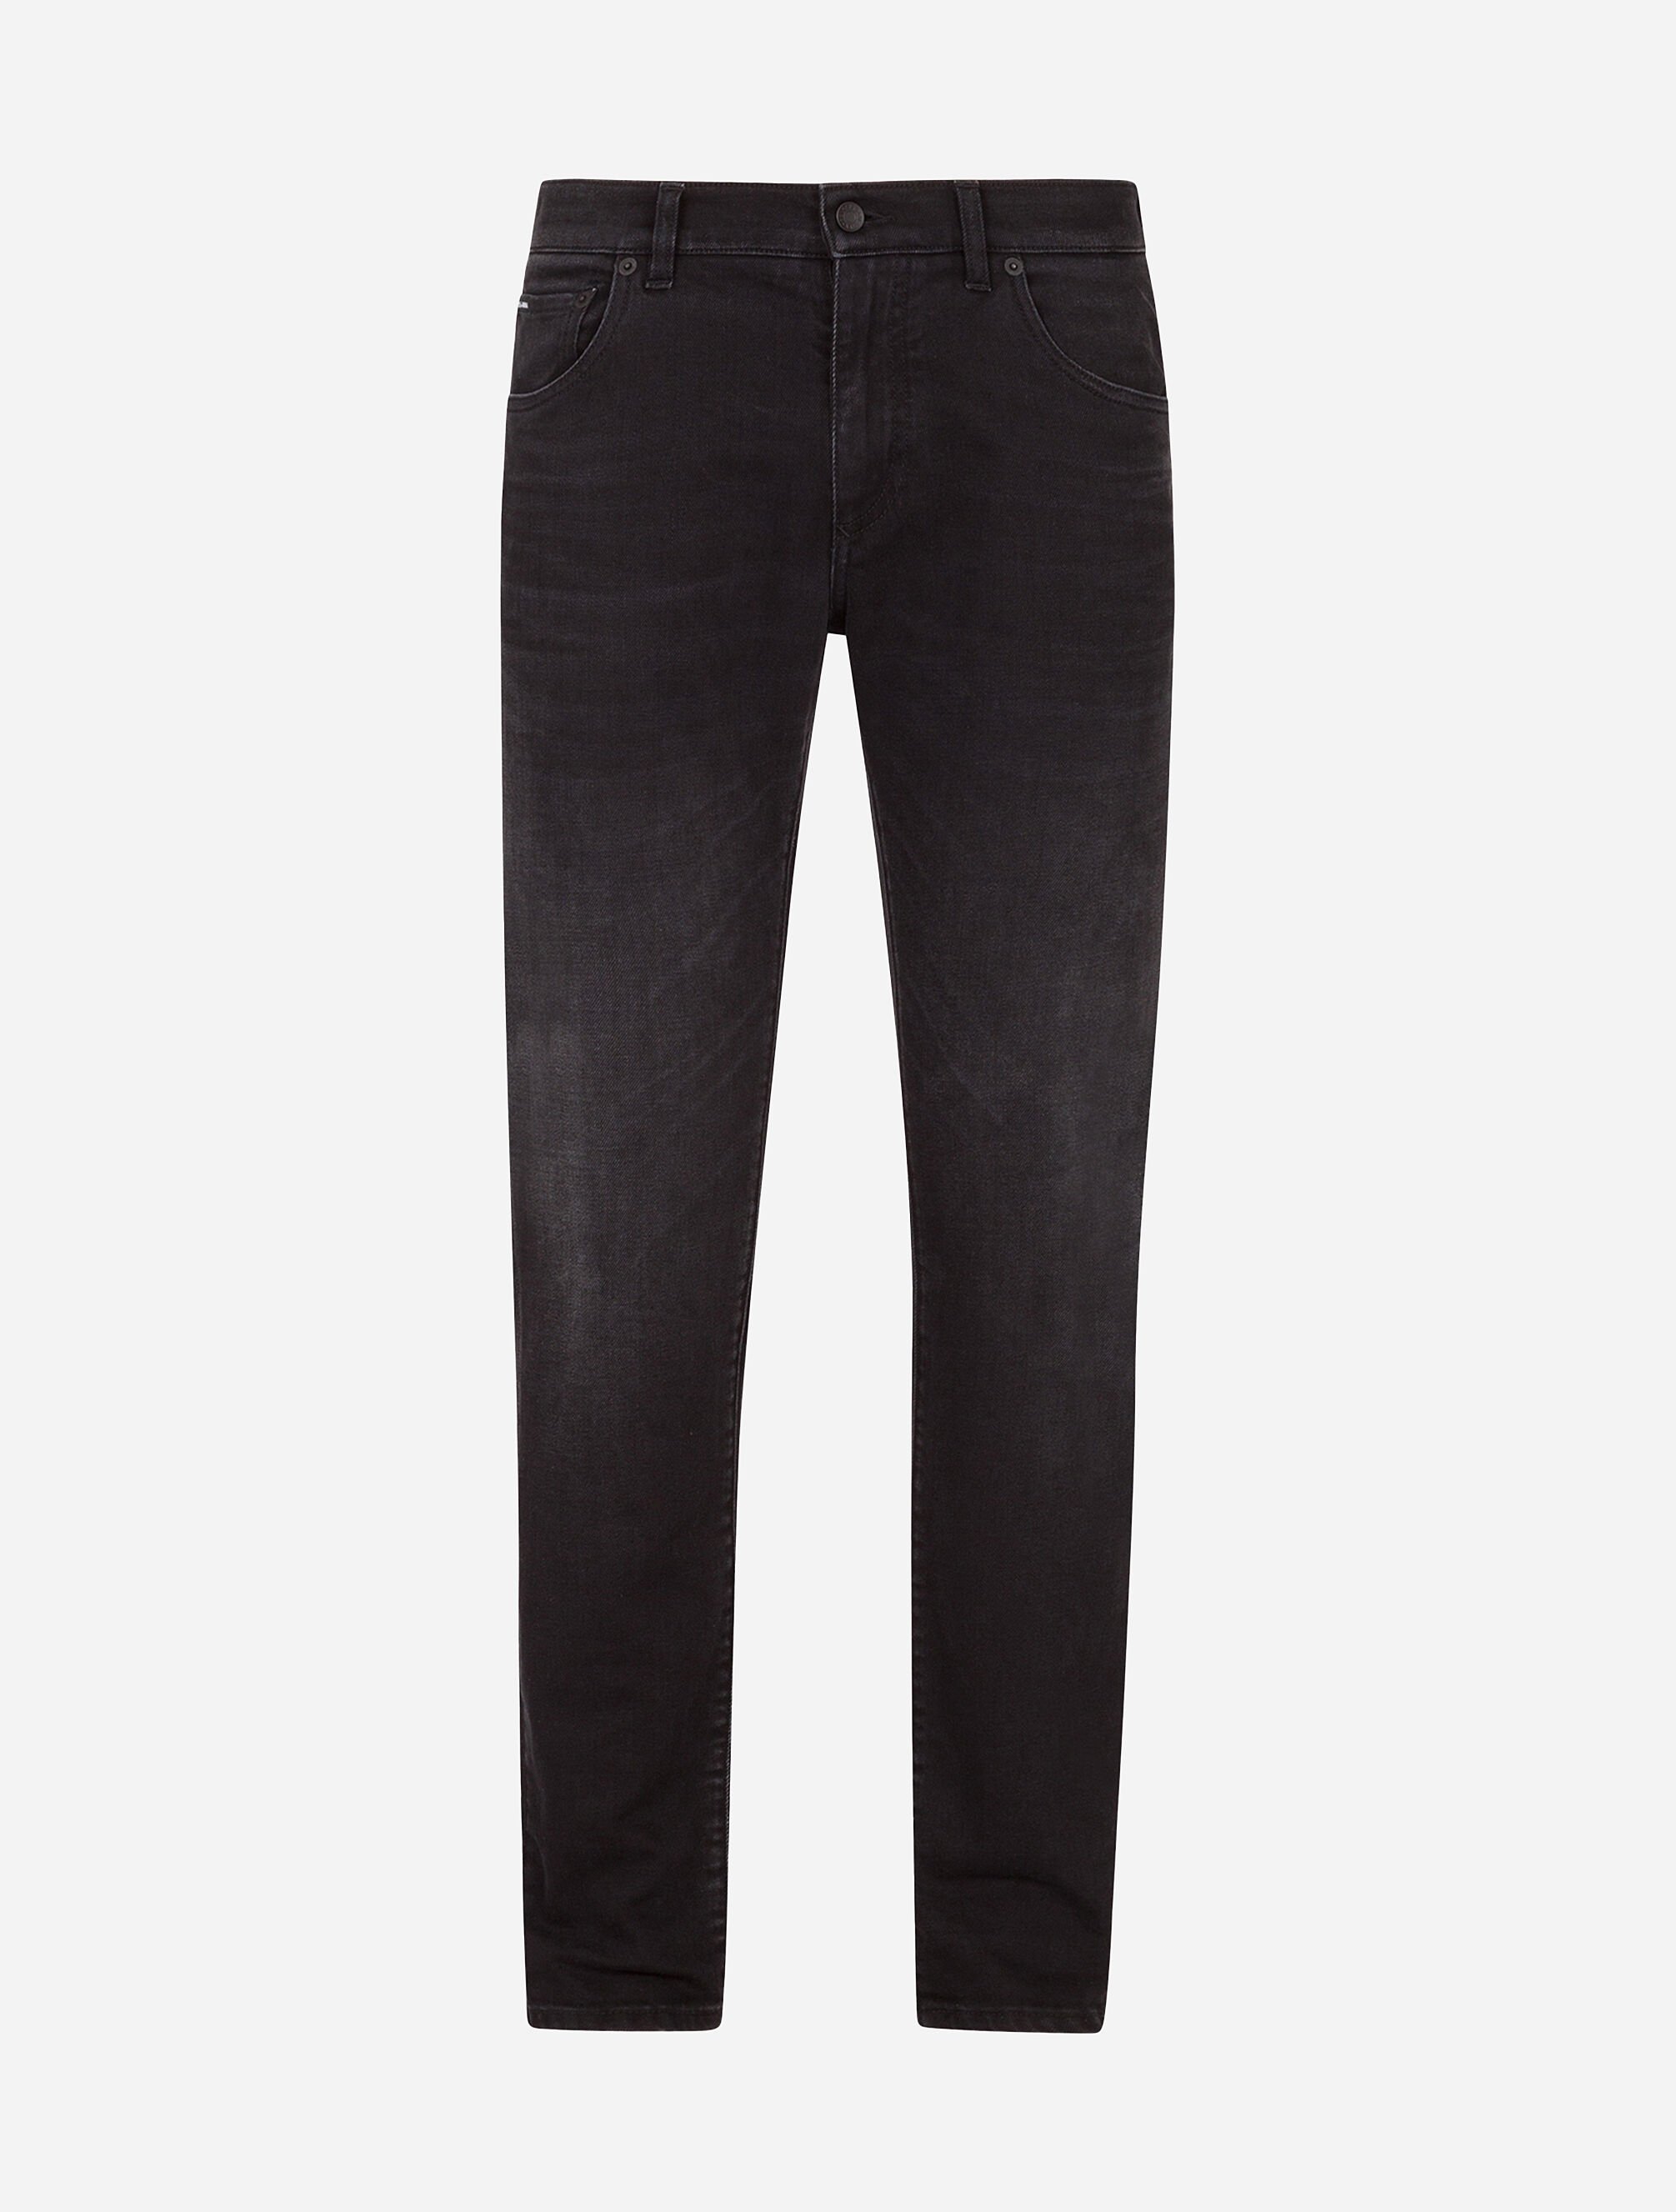 Dolce & Gabbana Washed black slim-fit stretch jeans Black GY6UETFUFJR